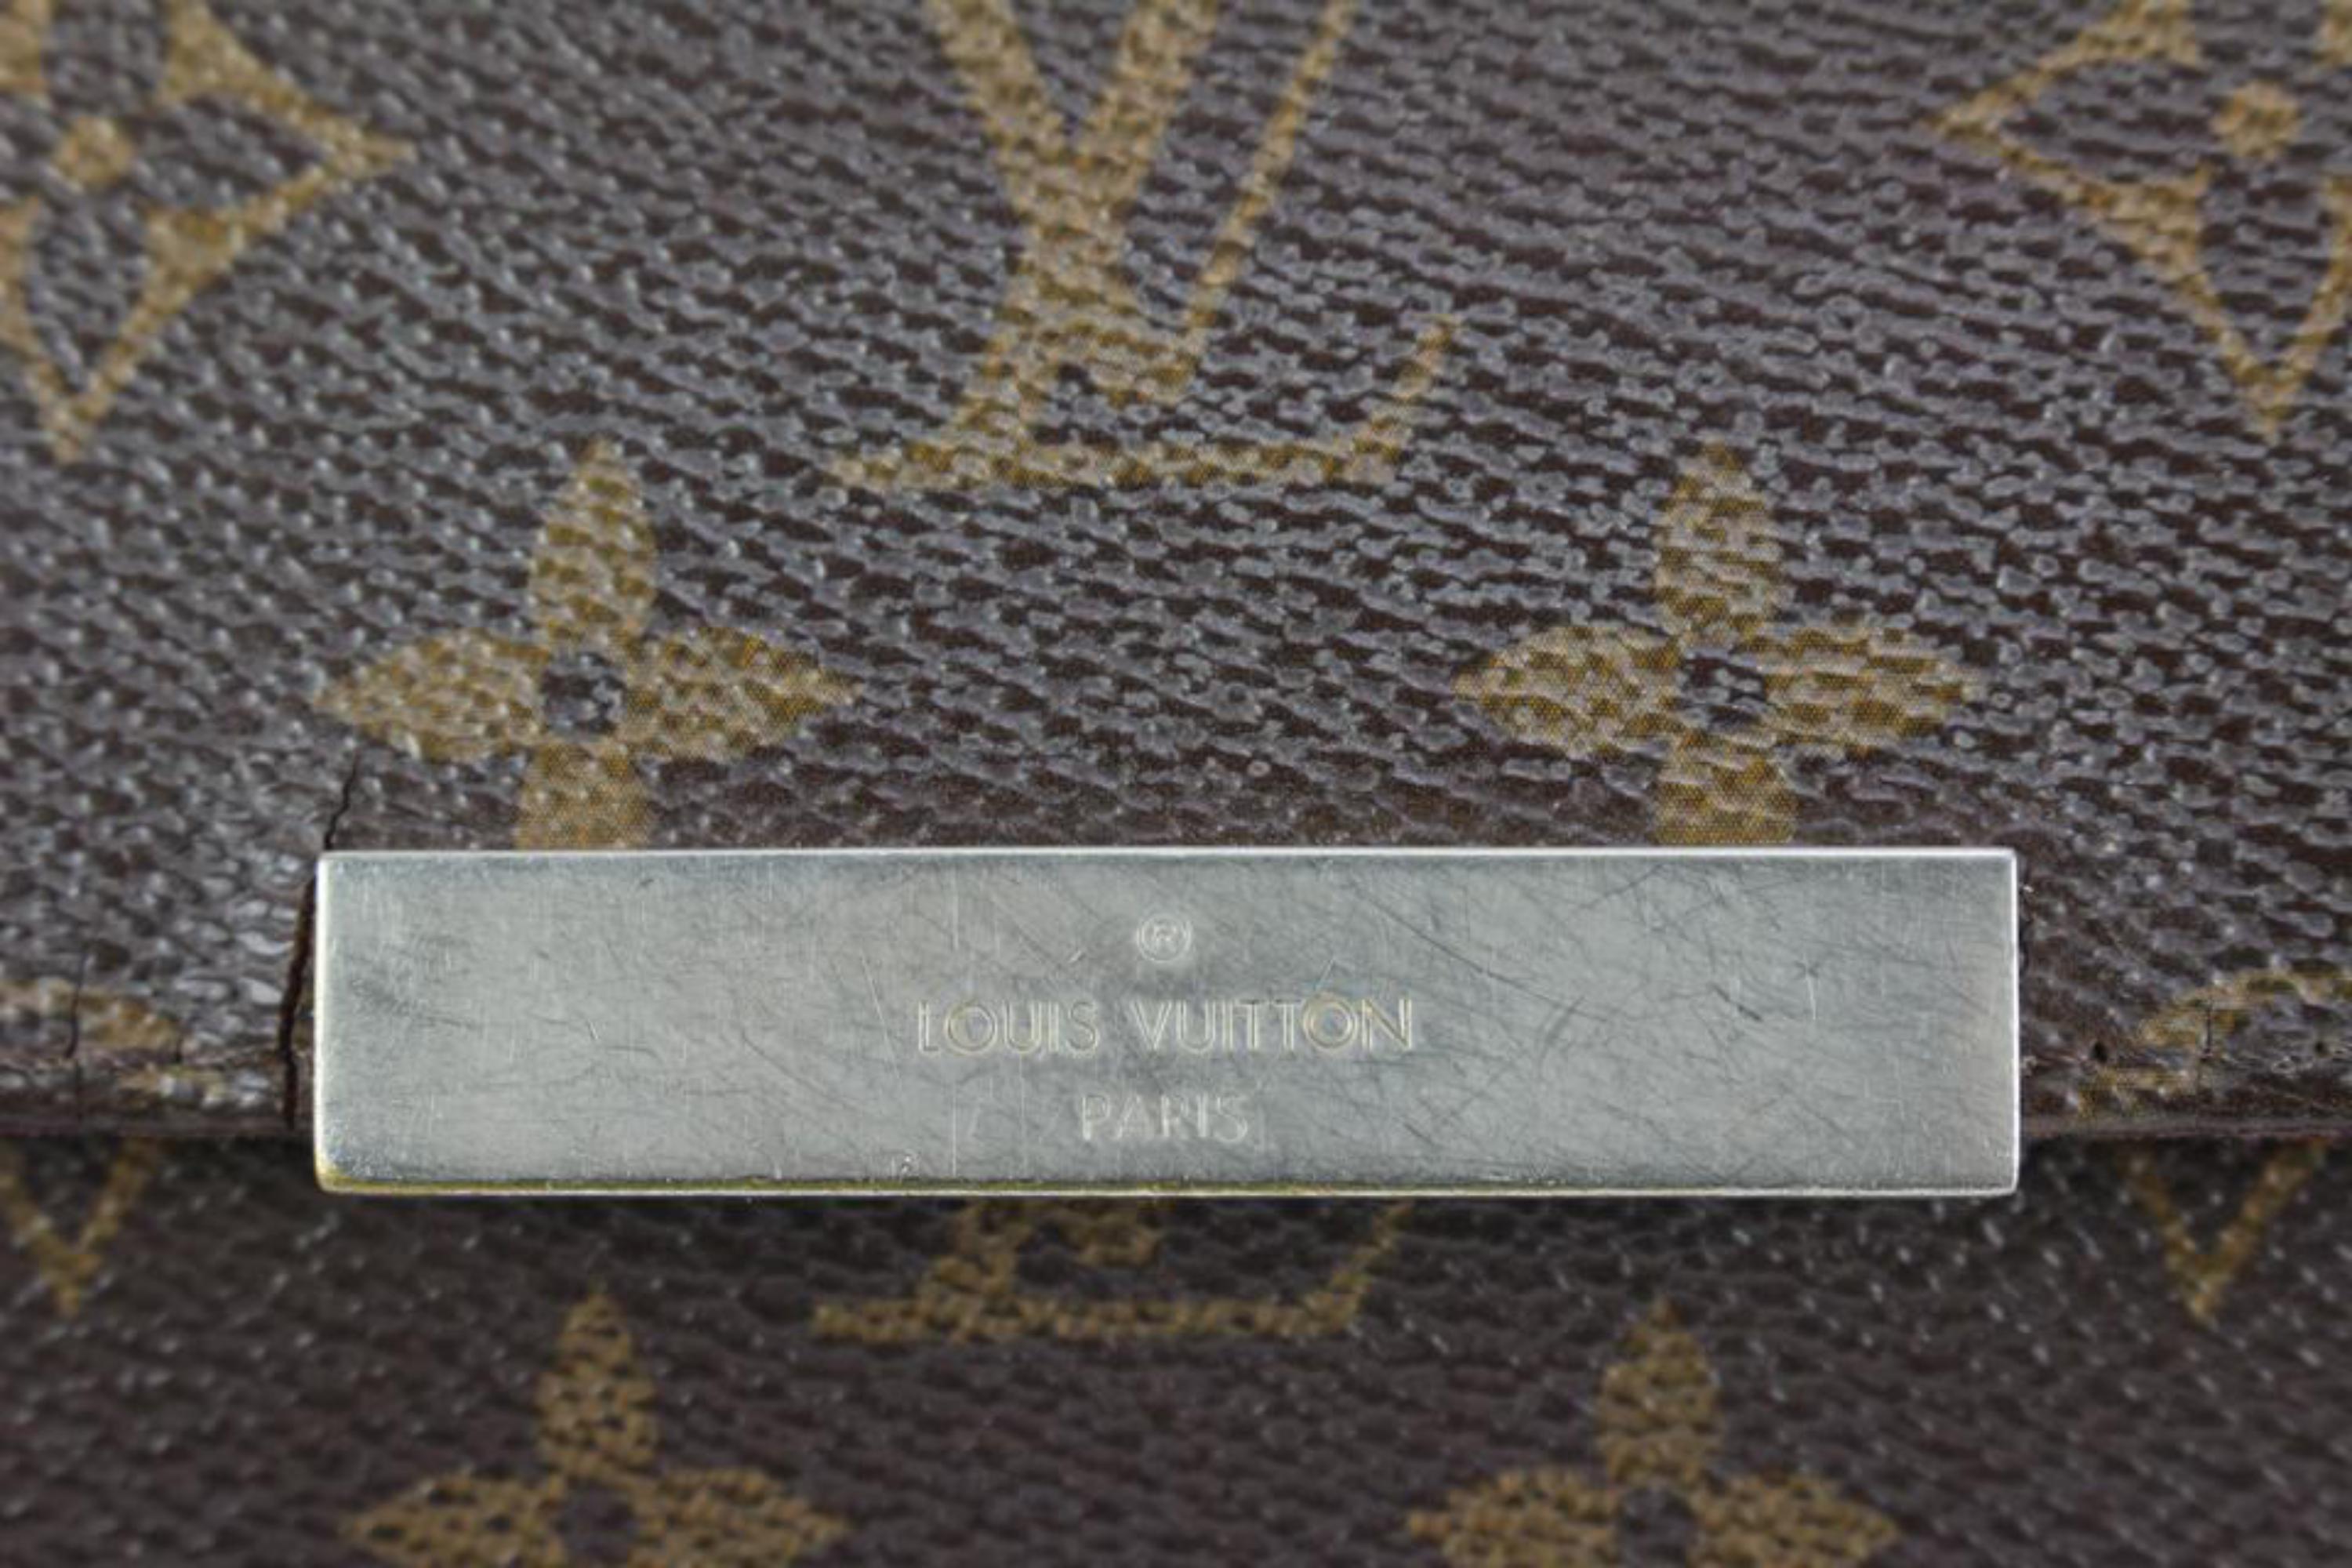 Authentic Louis Vuitton MM favorite models crossbody bags